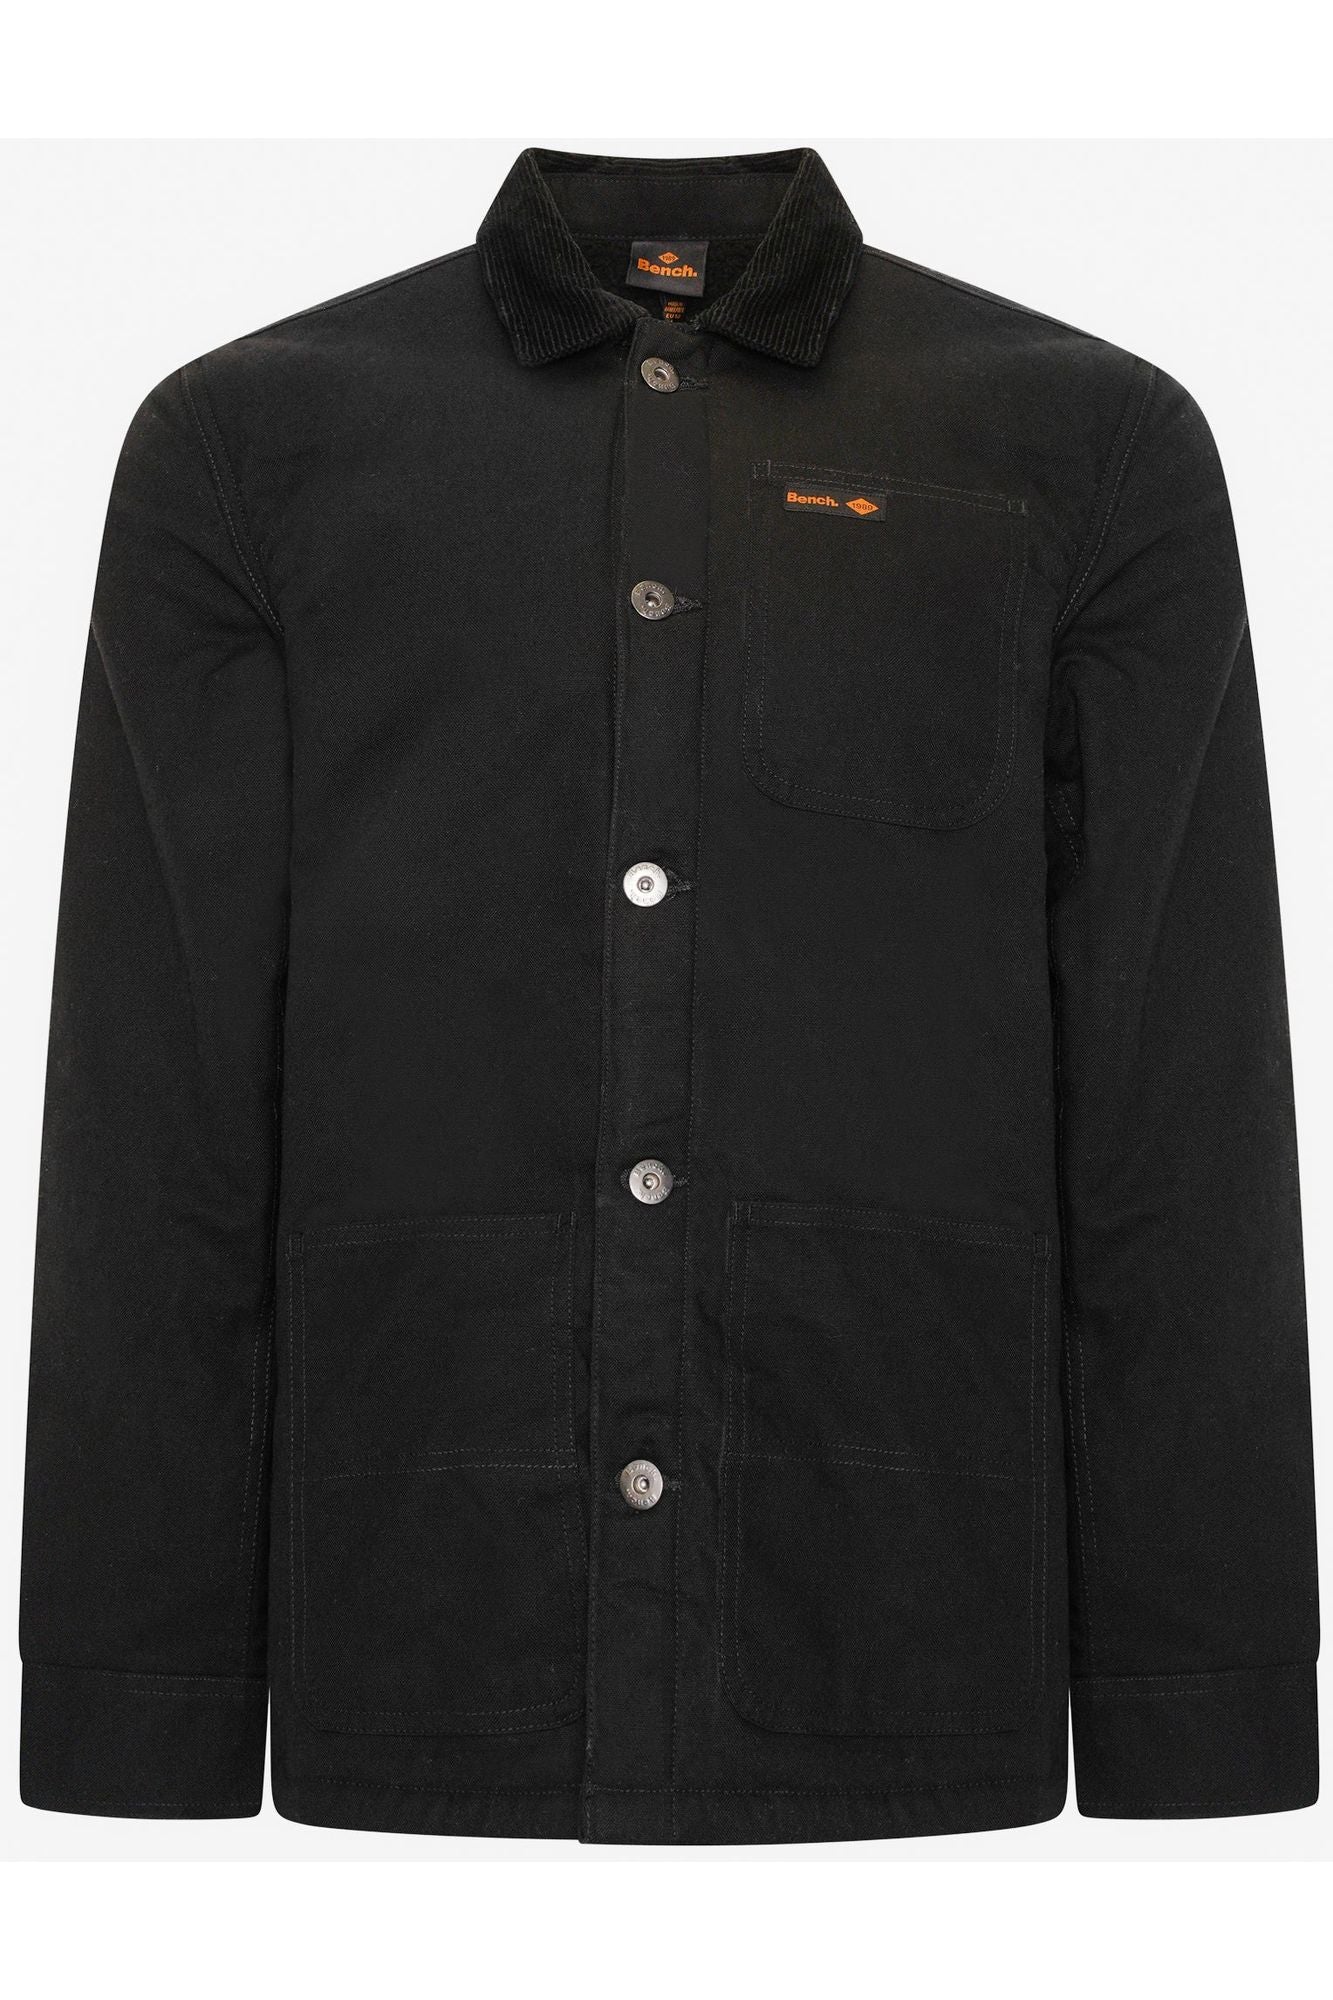 Mens 'CLEMENS' Jacket - BLACK - Shop at www.Bench.co.uk #LoveMyHood